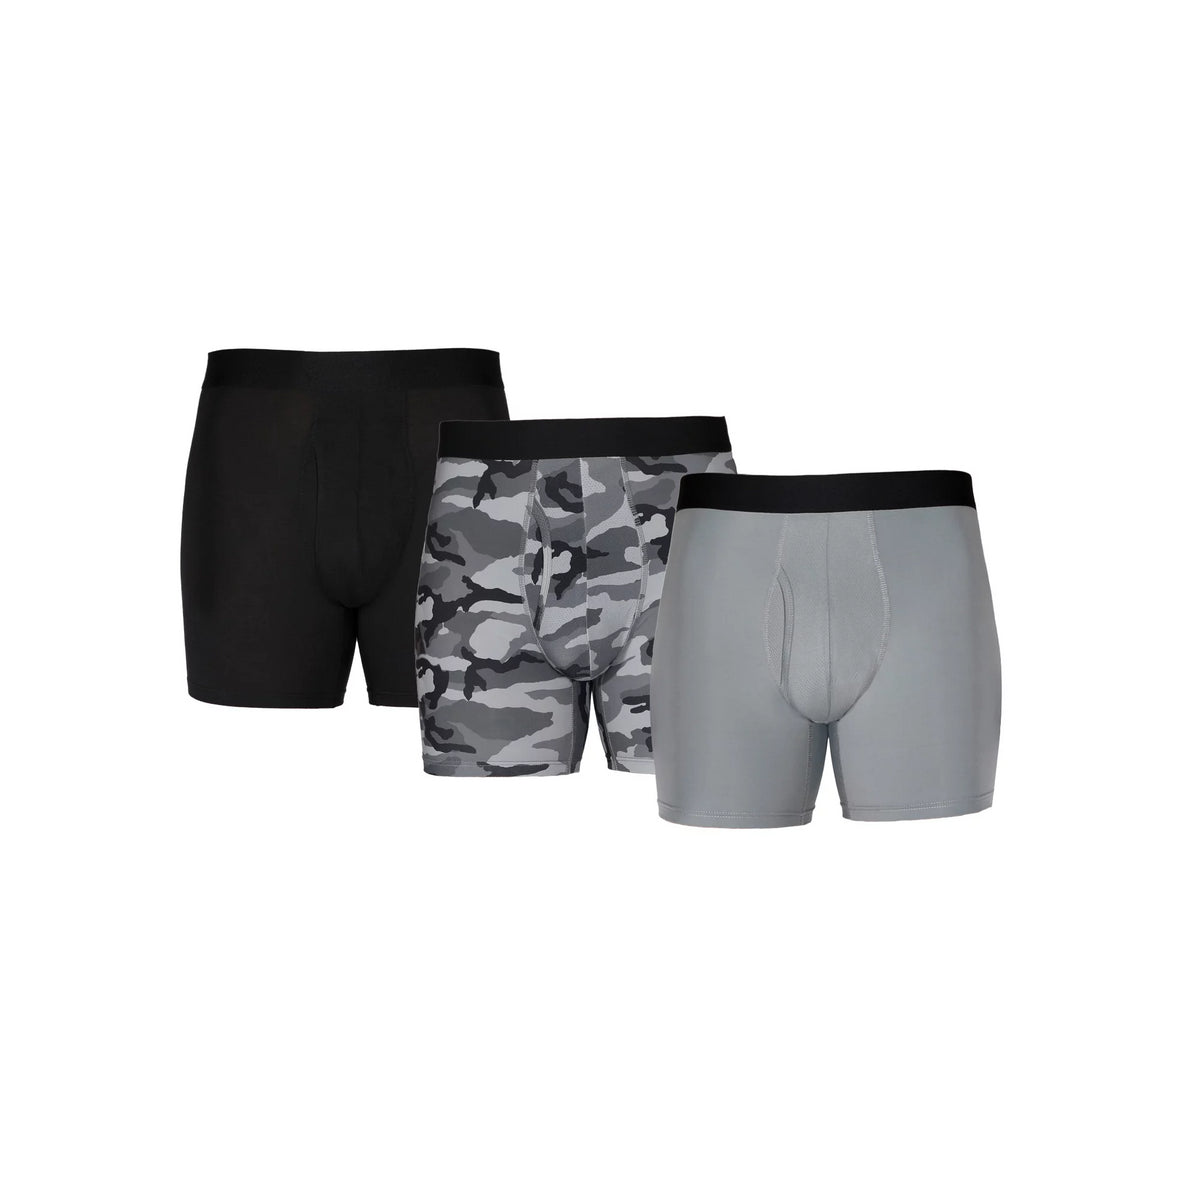 Athletic Works Mens Boxer Briefs Underwear, 3 Pack